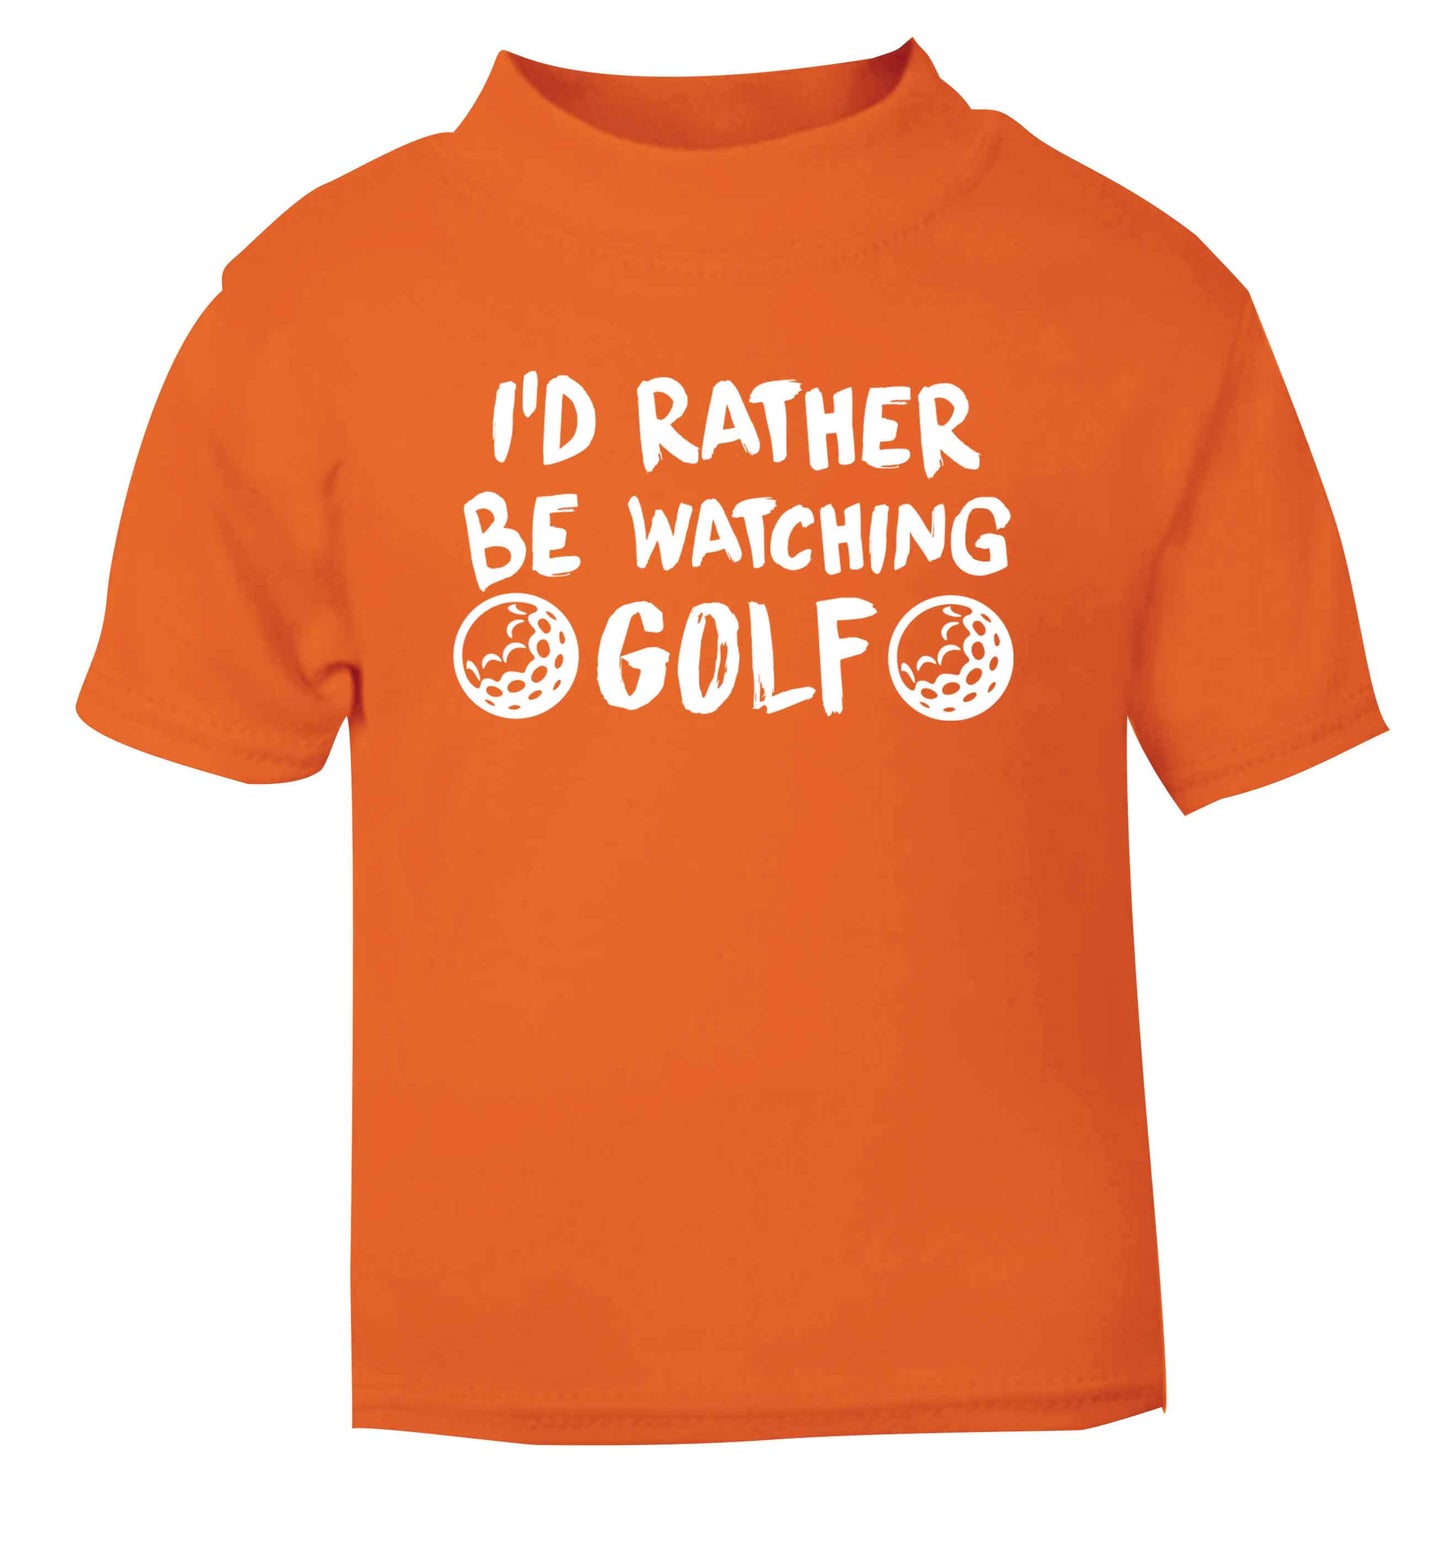 I'd rather be watching golf orange Baby Toddler Tshirt 2 Years